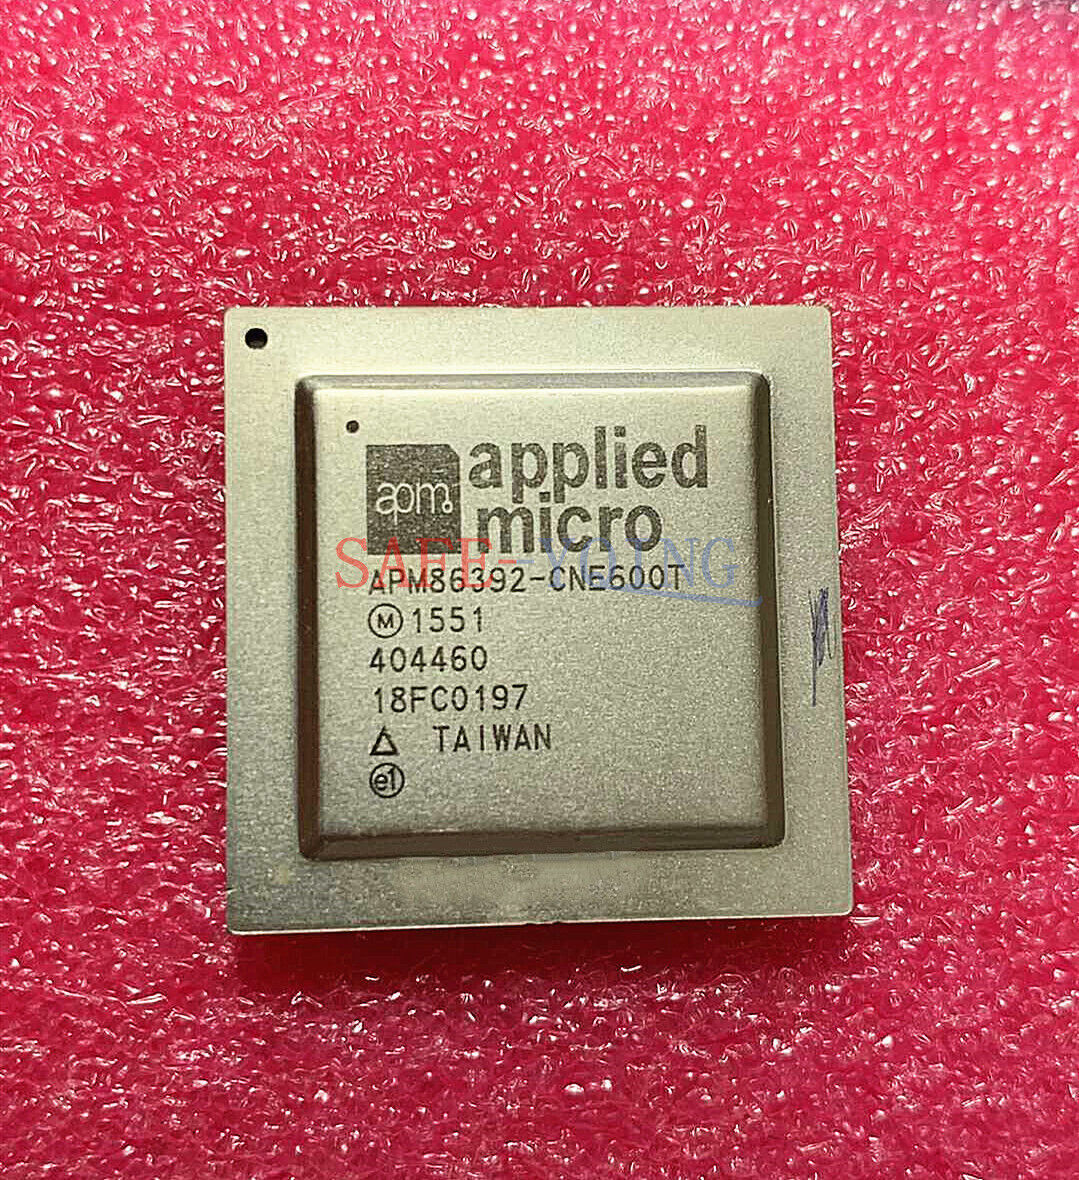 1PCS APM86392-CNE600T applied micro BGA NEW #F9